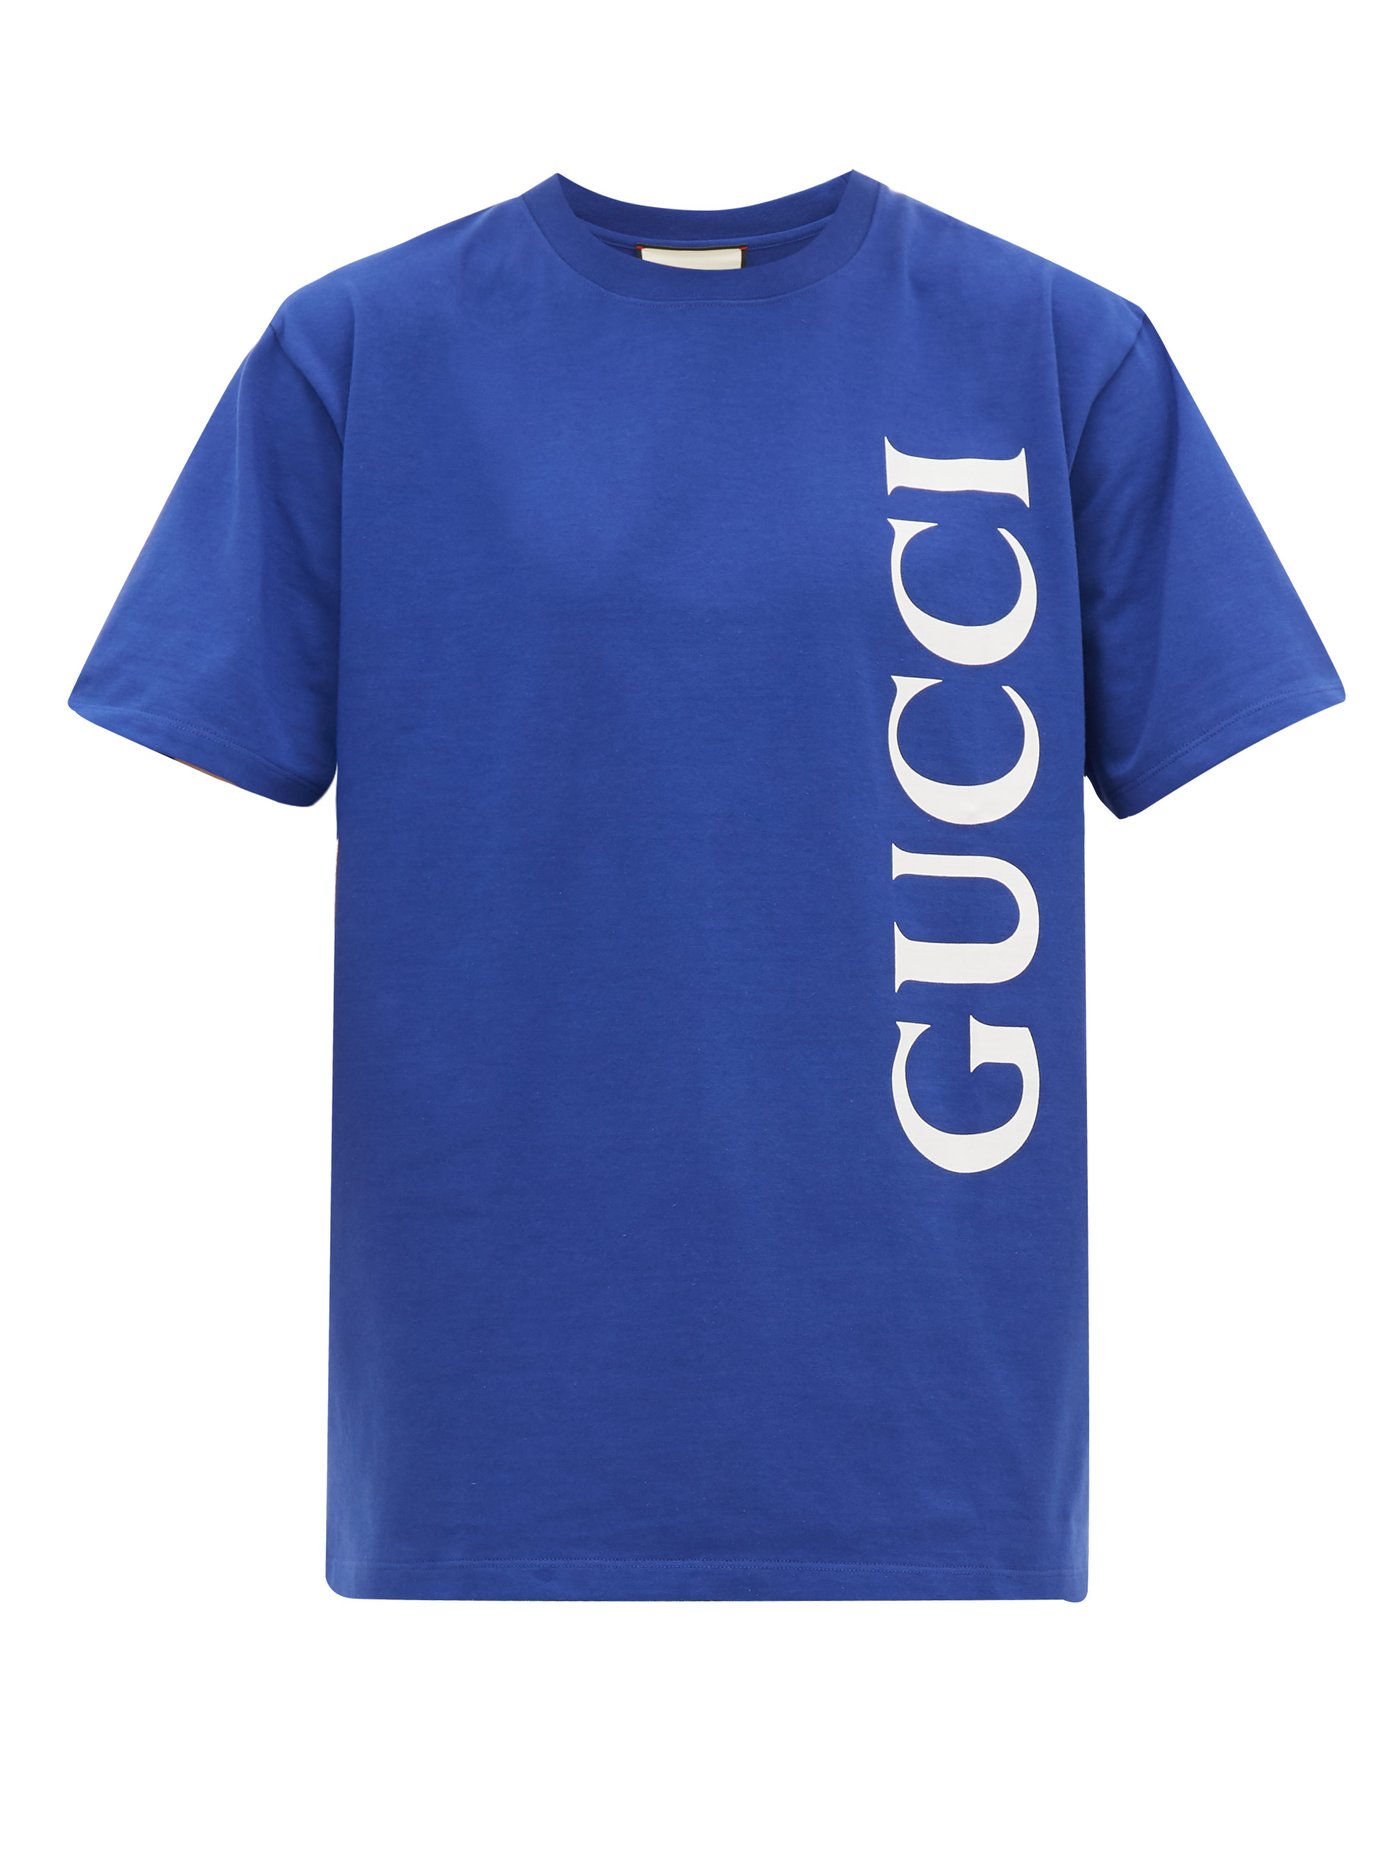 blue gucci shirt